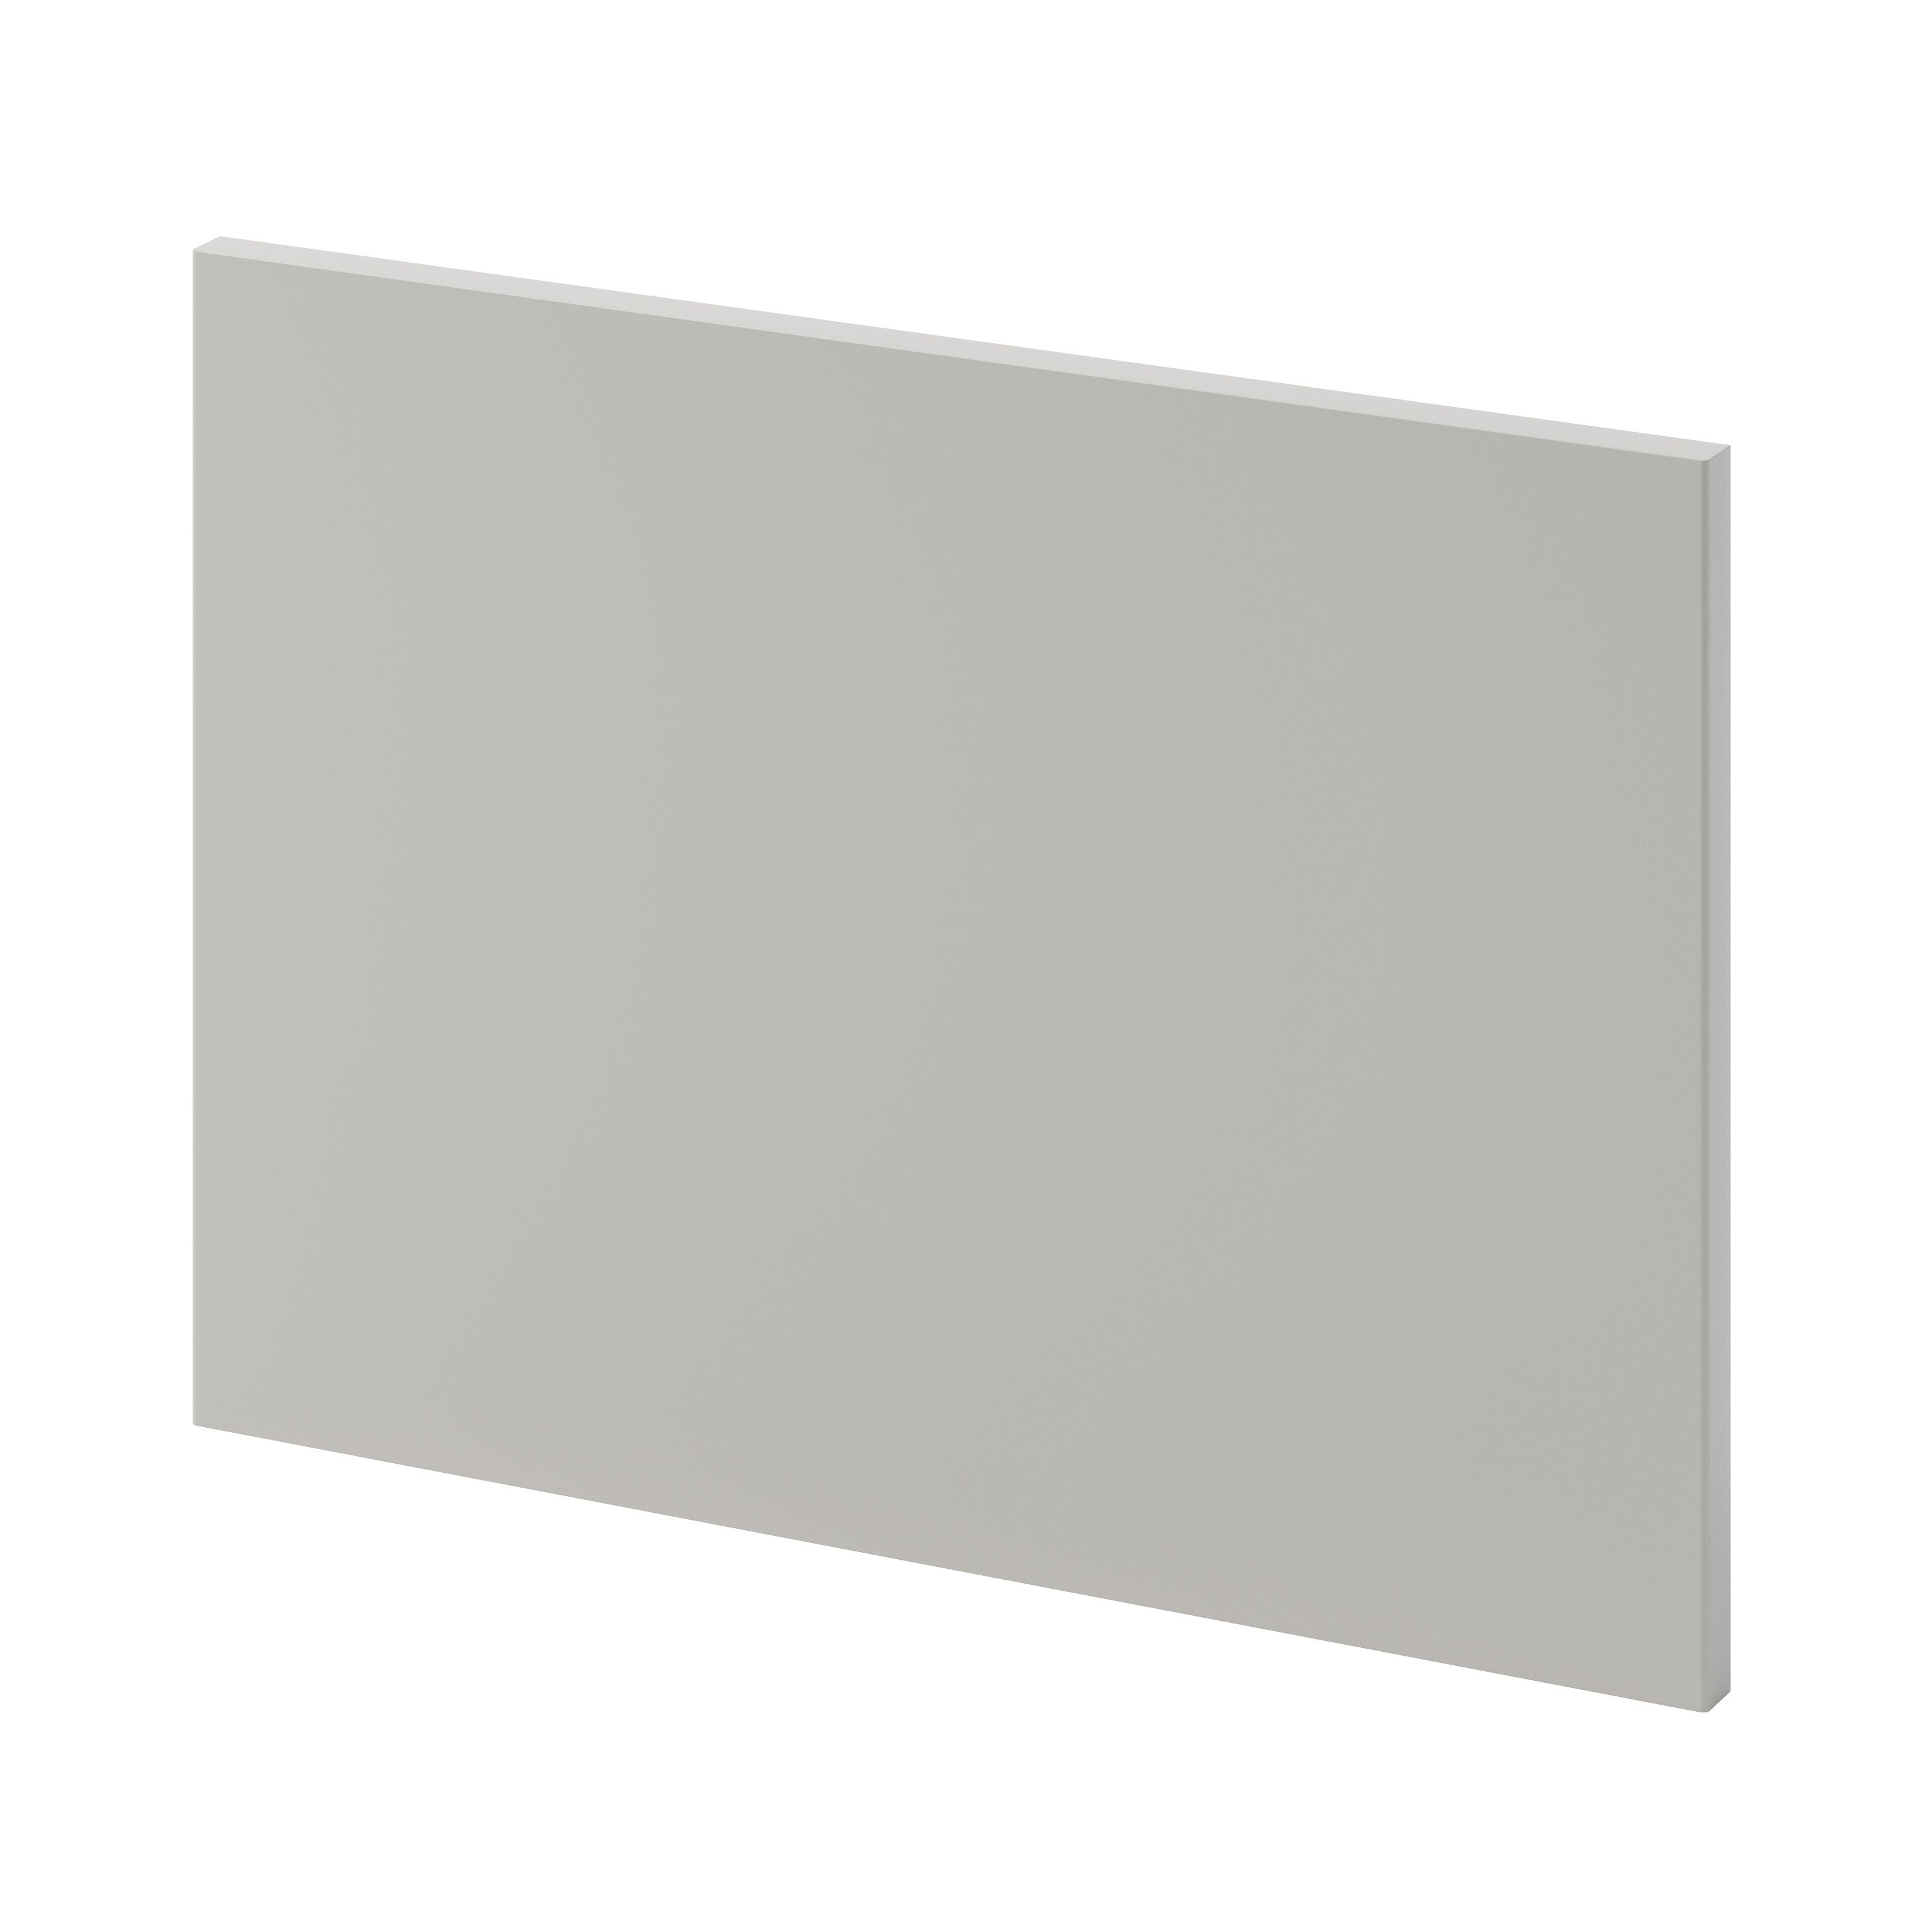 GoodHome Stevia Matt Pewter grey slab Drawer front, bridging door & bi fold door, (W)500mm (H)356mm (T)18mm